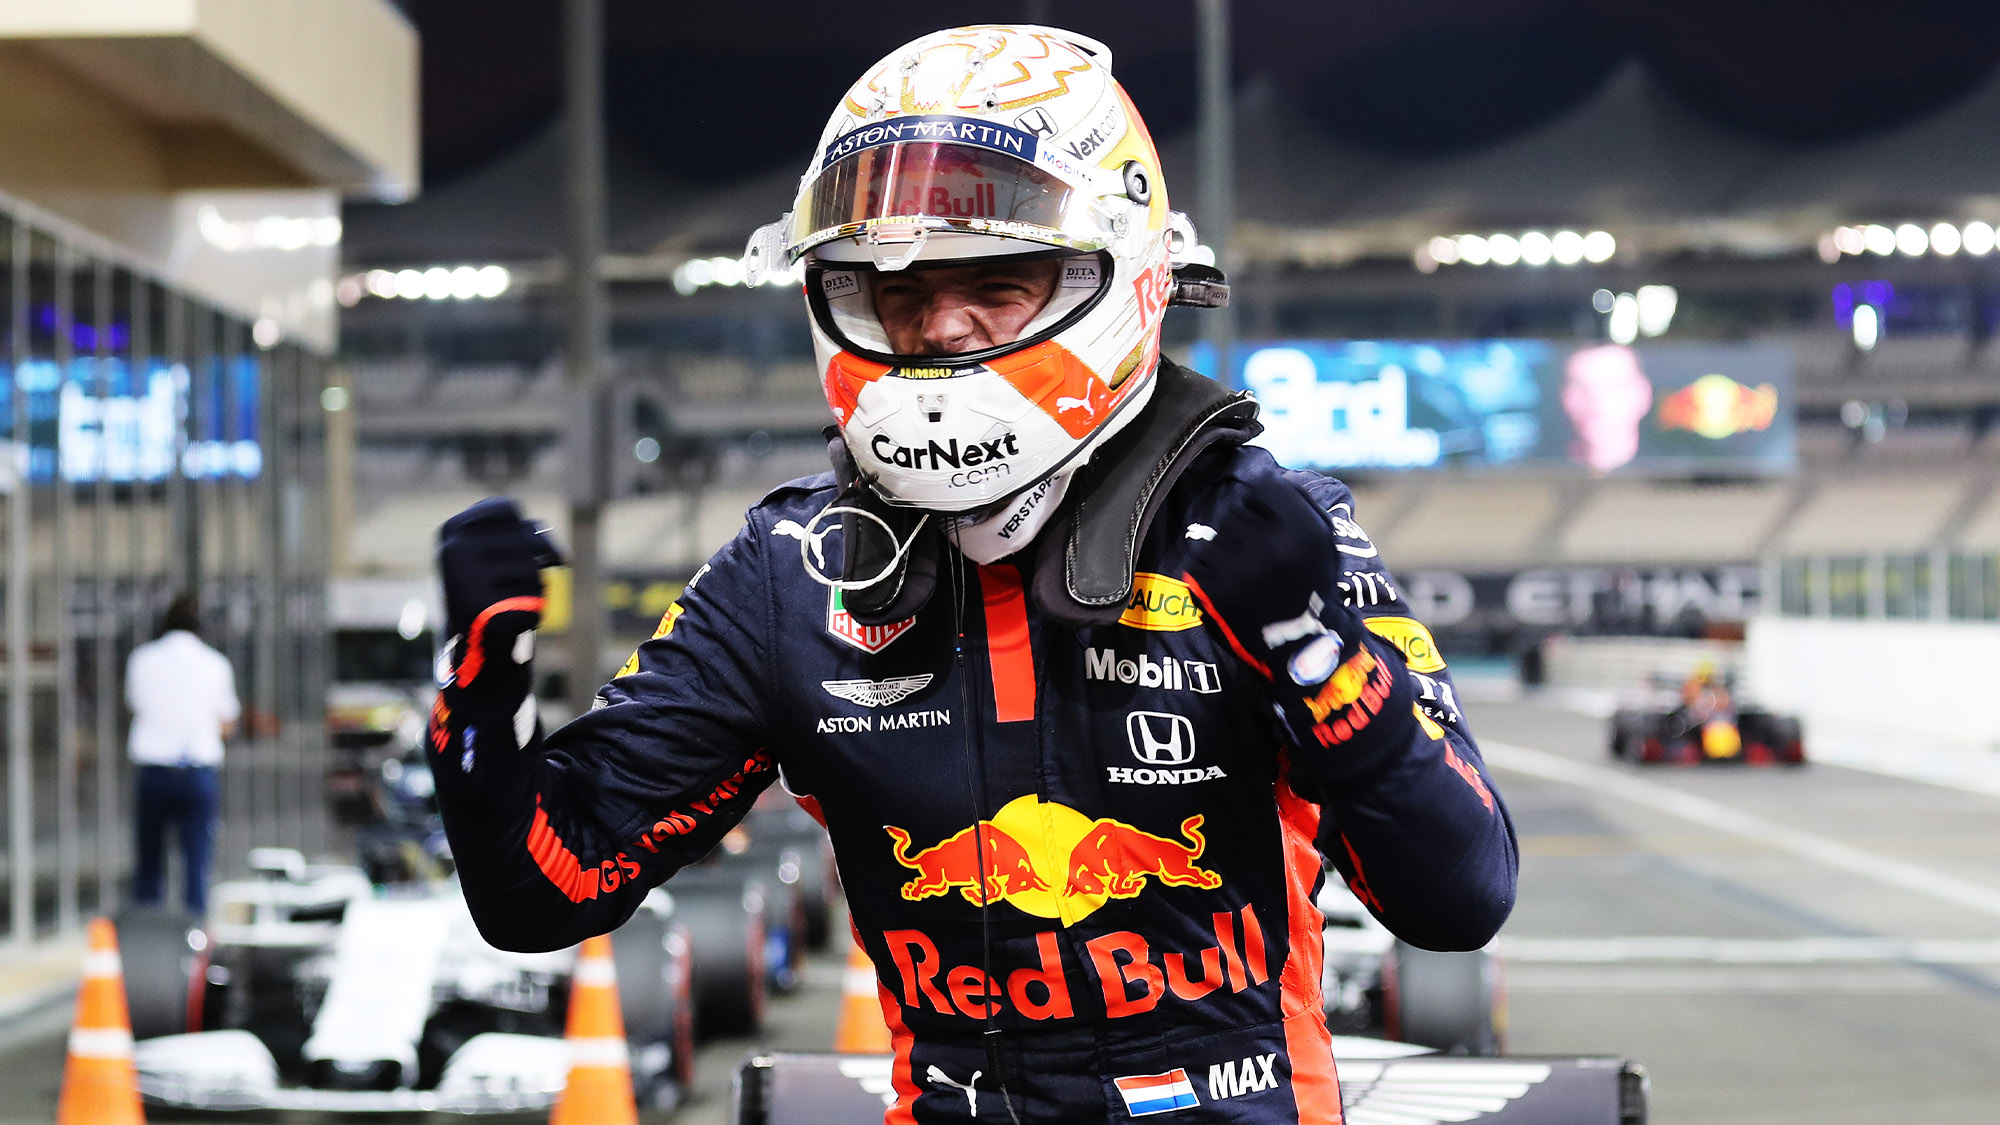 Abu Dhabi GP: Verstappen wins ahead of Bottas and Hamilton